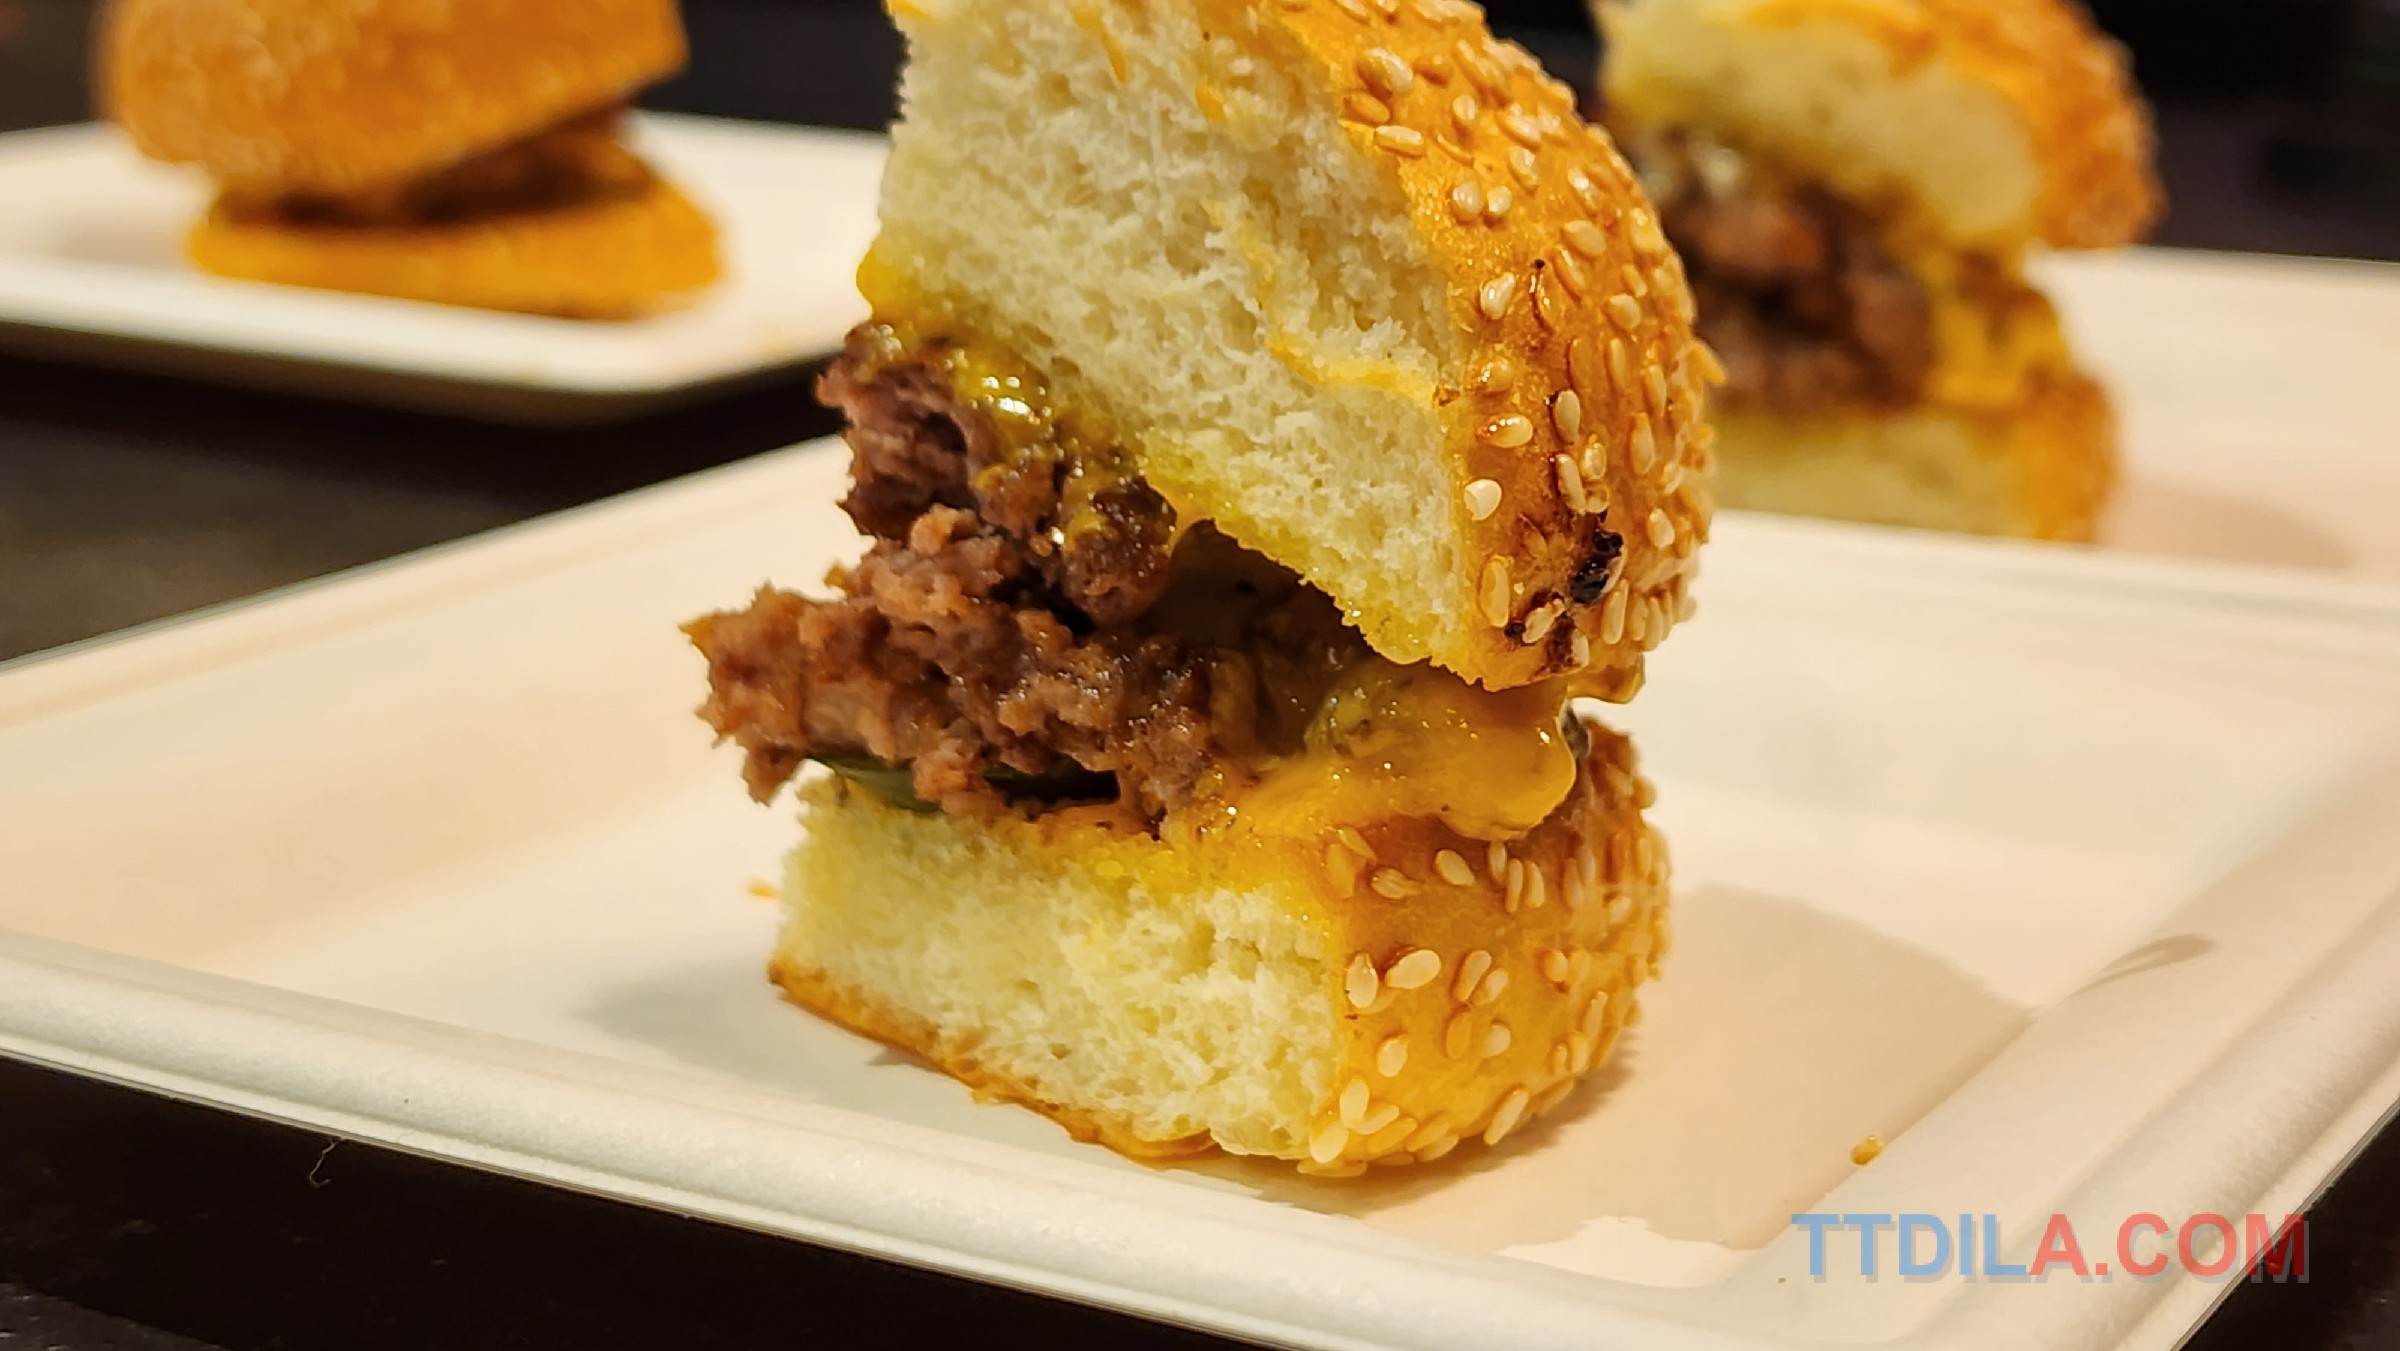 Topanga Social Creates The Future Of Mall Food With Mini Kabob And